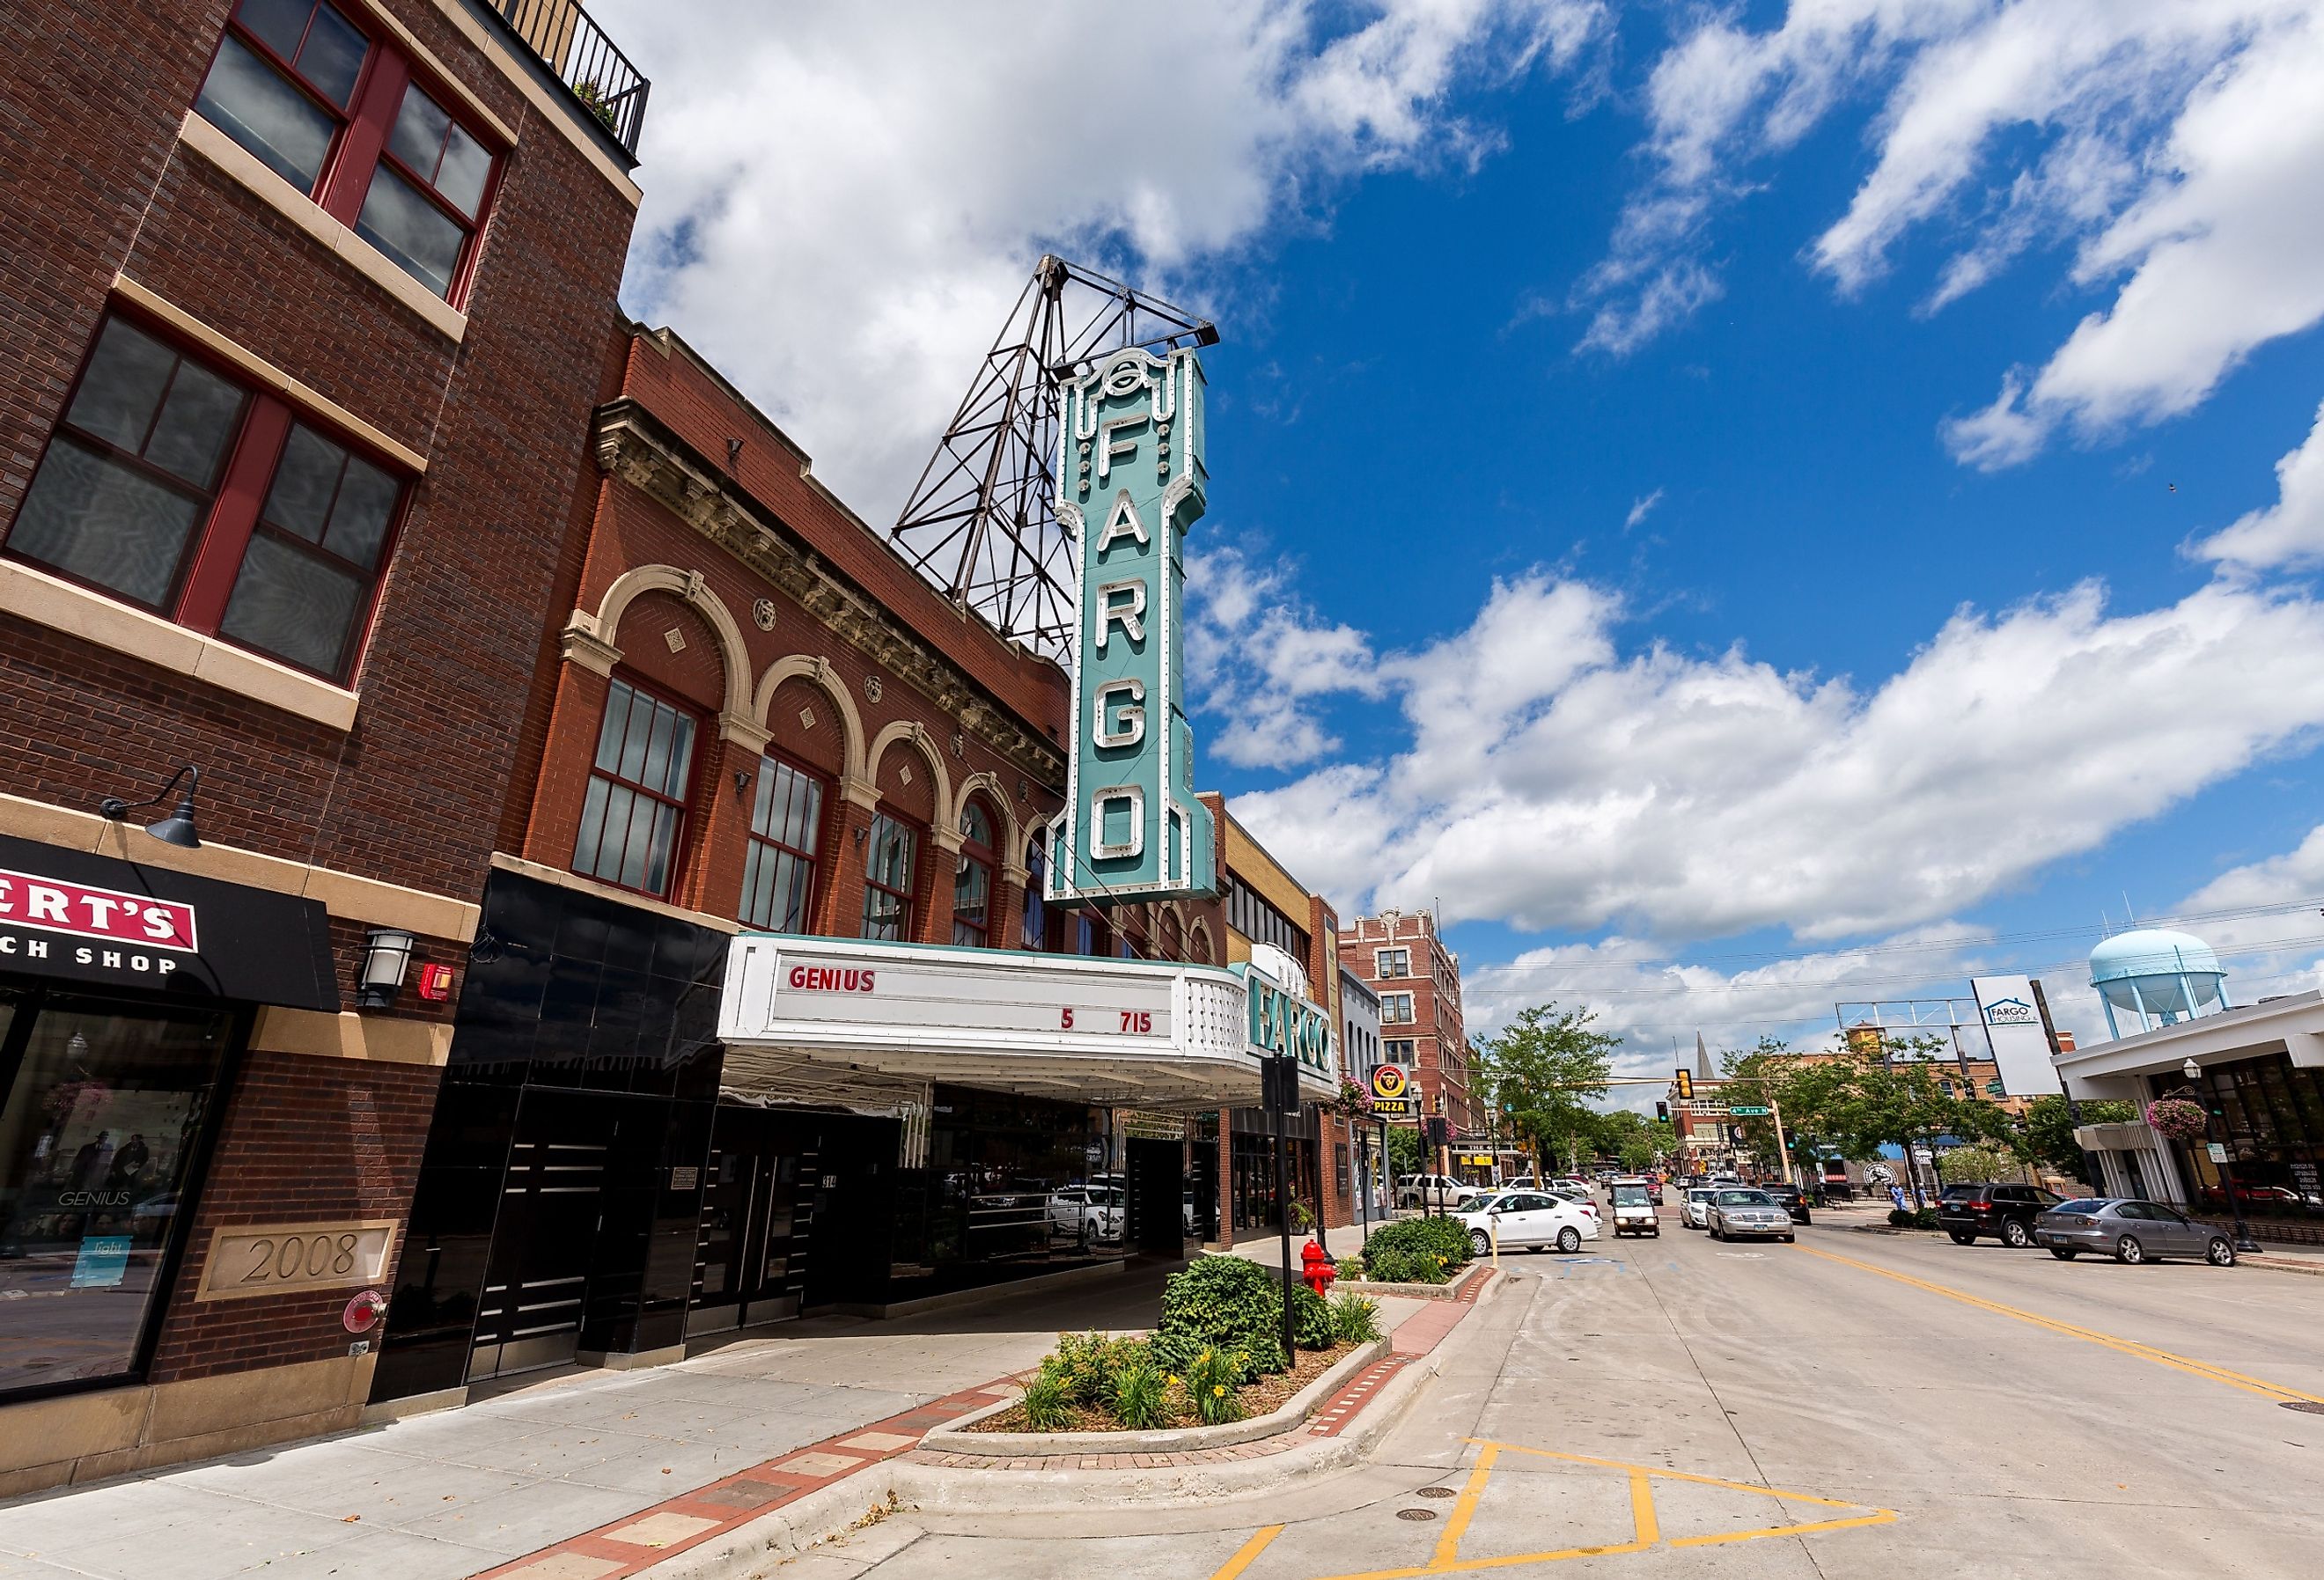 Downtown Fargo and the Fargo movie theater, North Dakota. Image credit David Harmantas via Shutterstock